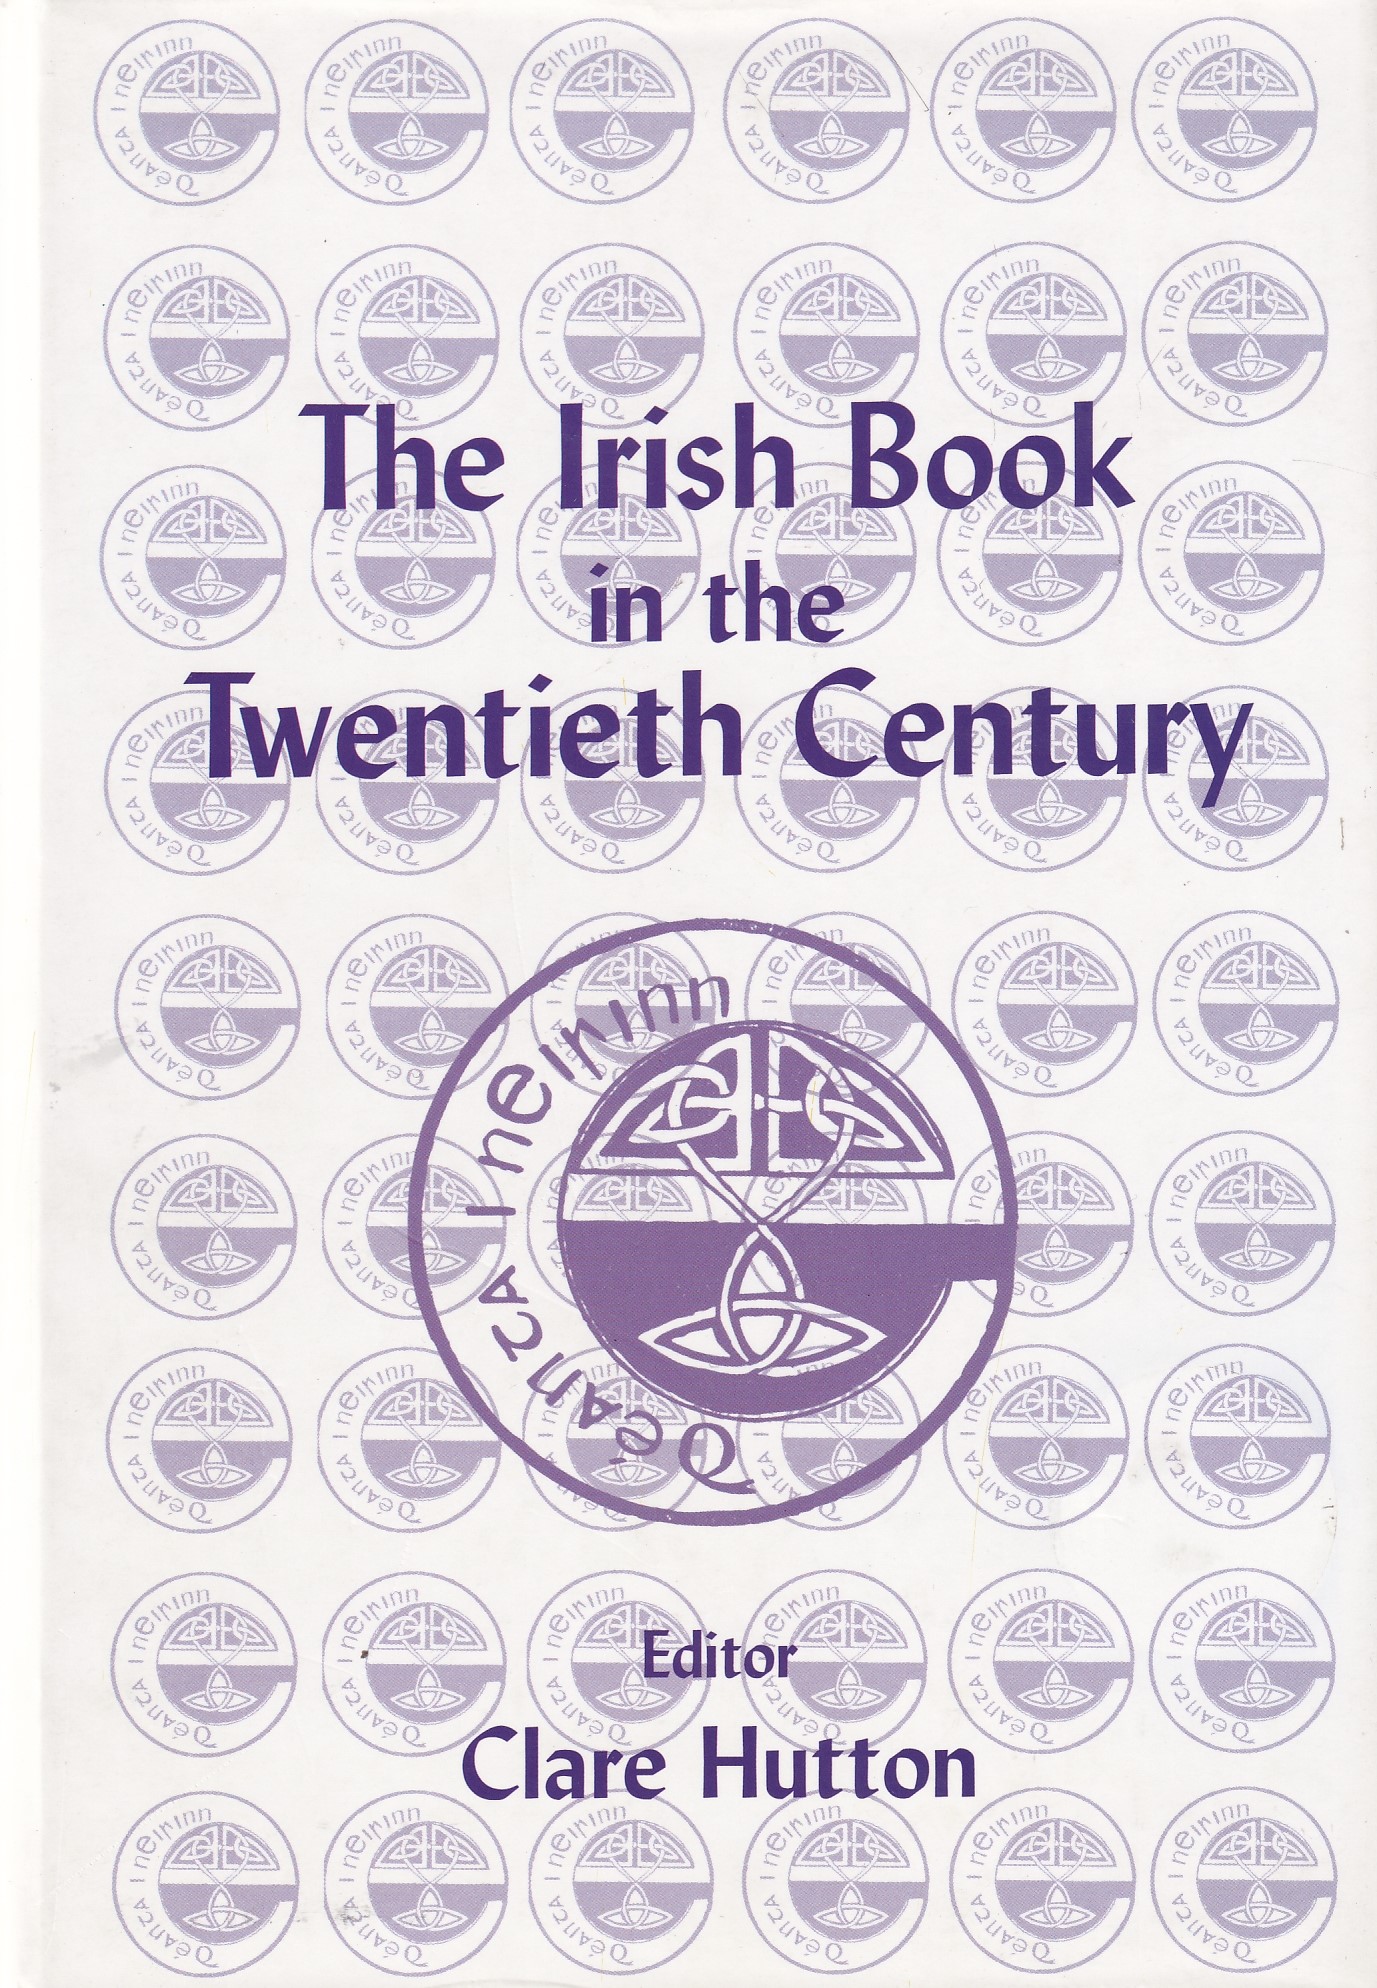 The Irish Book in the Twentieth Century | Clare Hutton | Charlie Byrne's